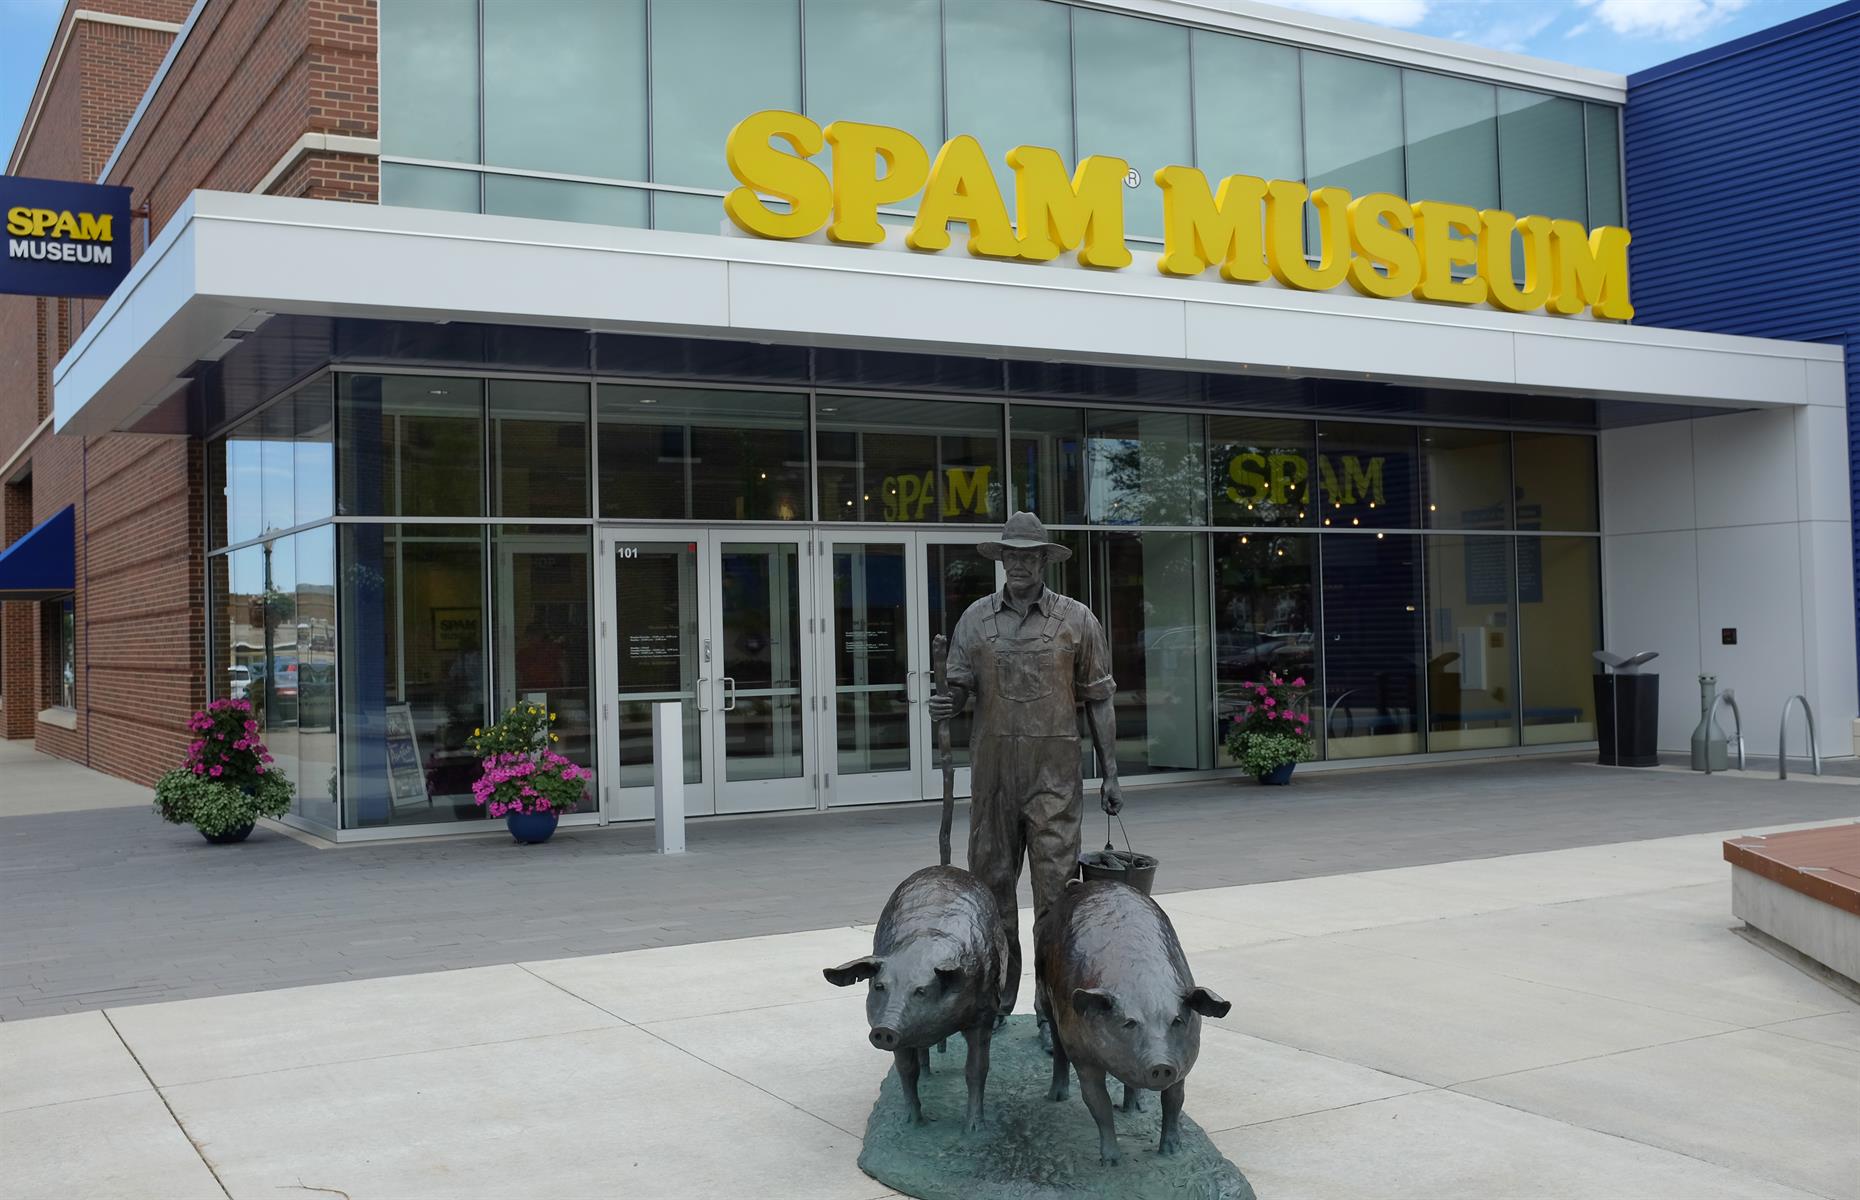 Spam Museum, Minnesota, USA